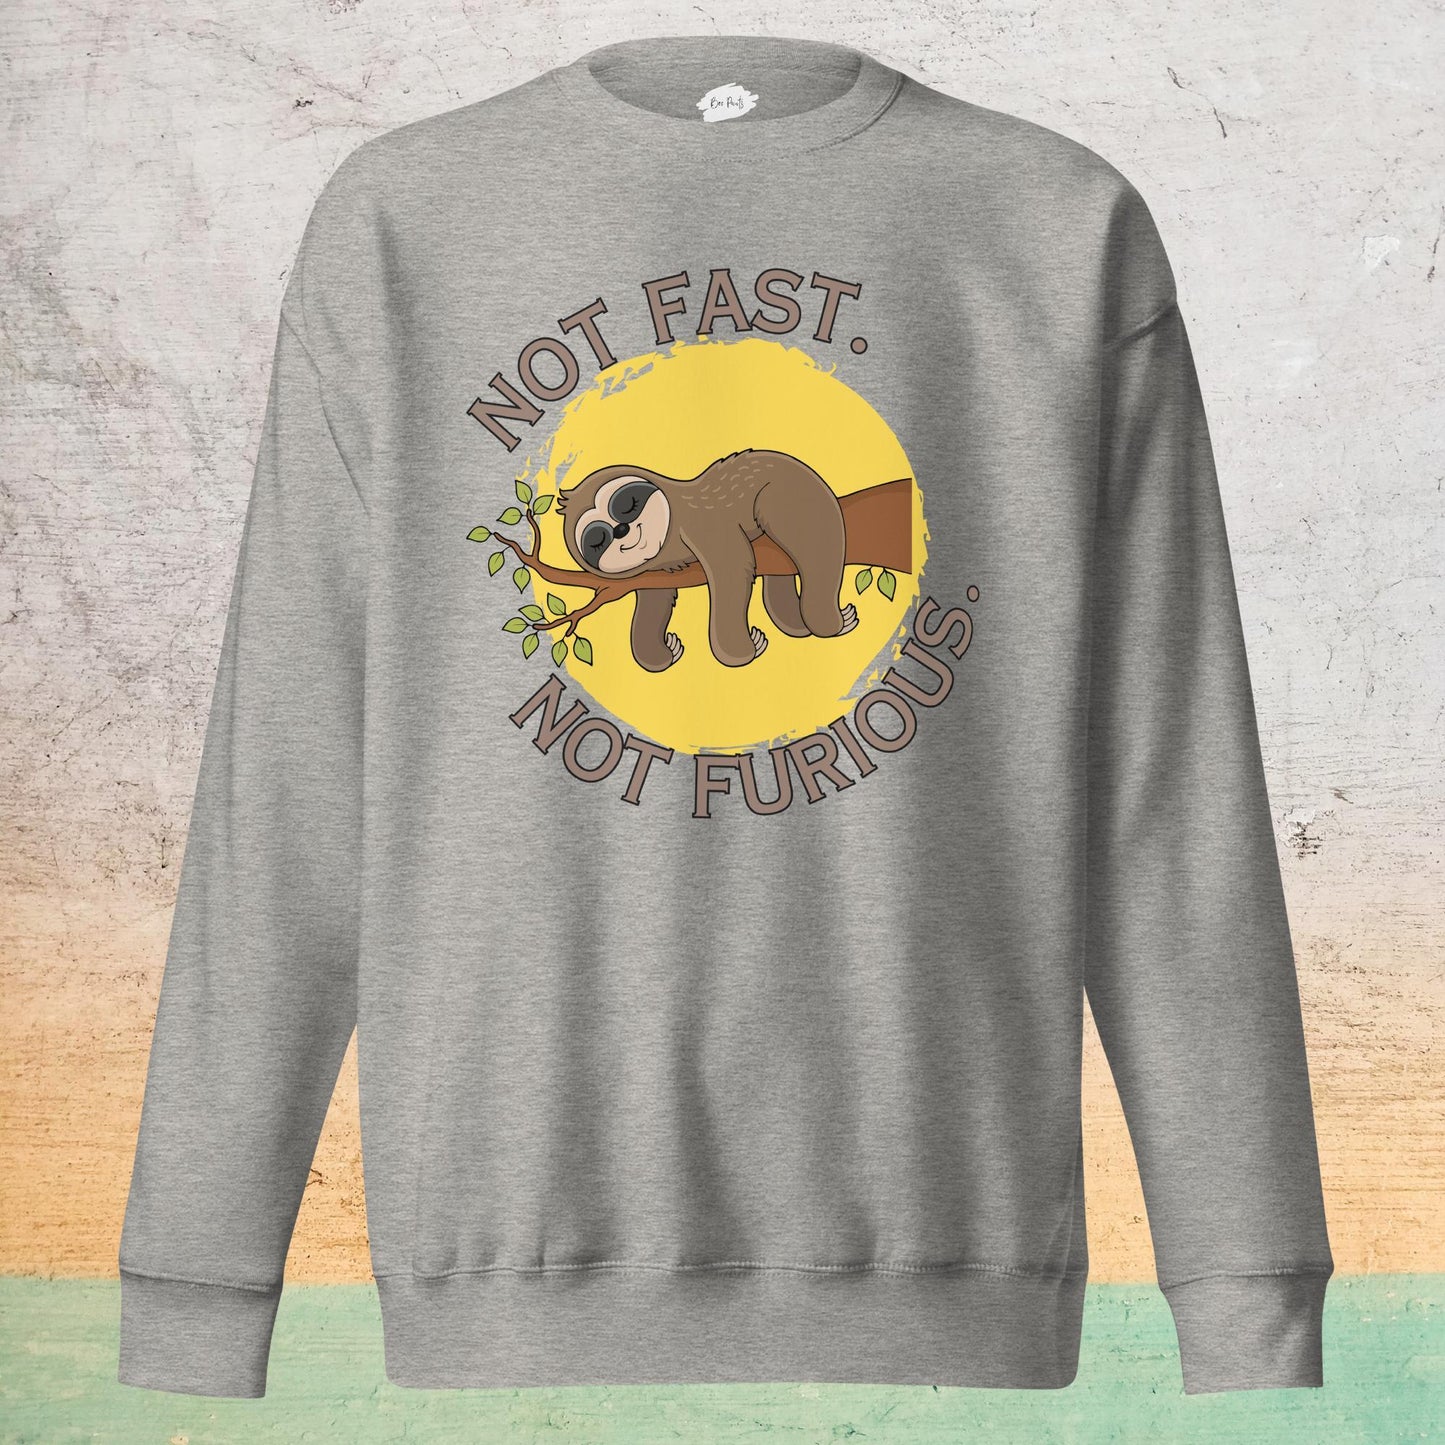 Premium Crew Sweatshirt - Not Fast Not Furious